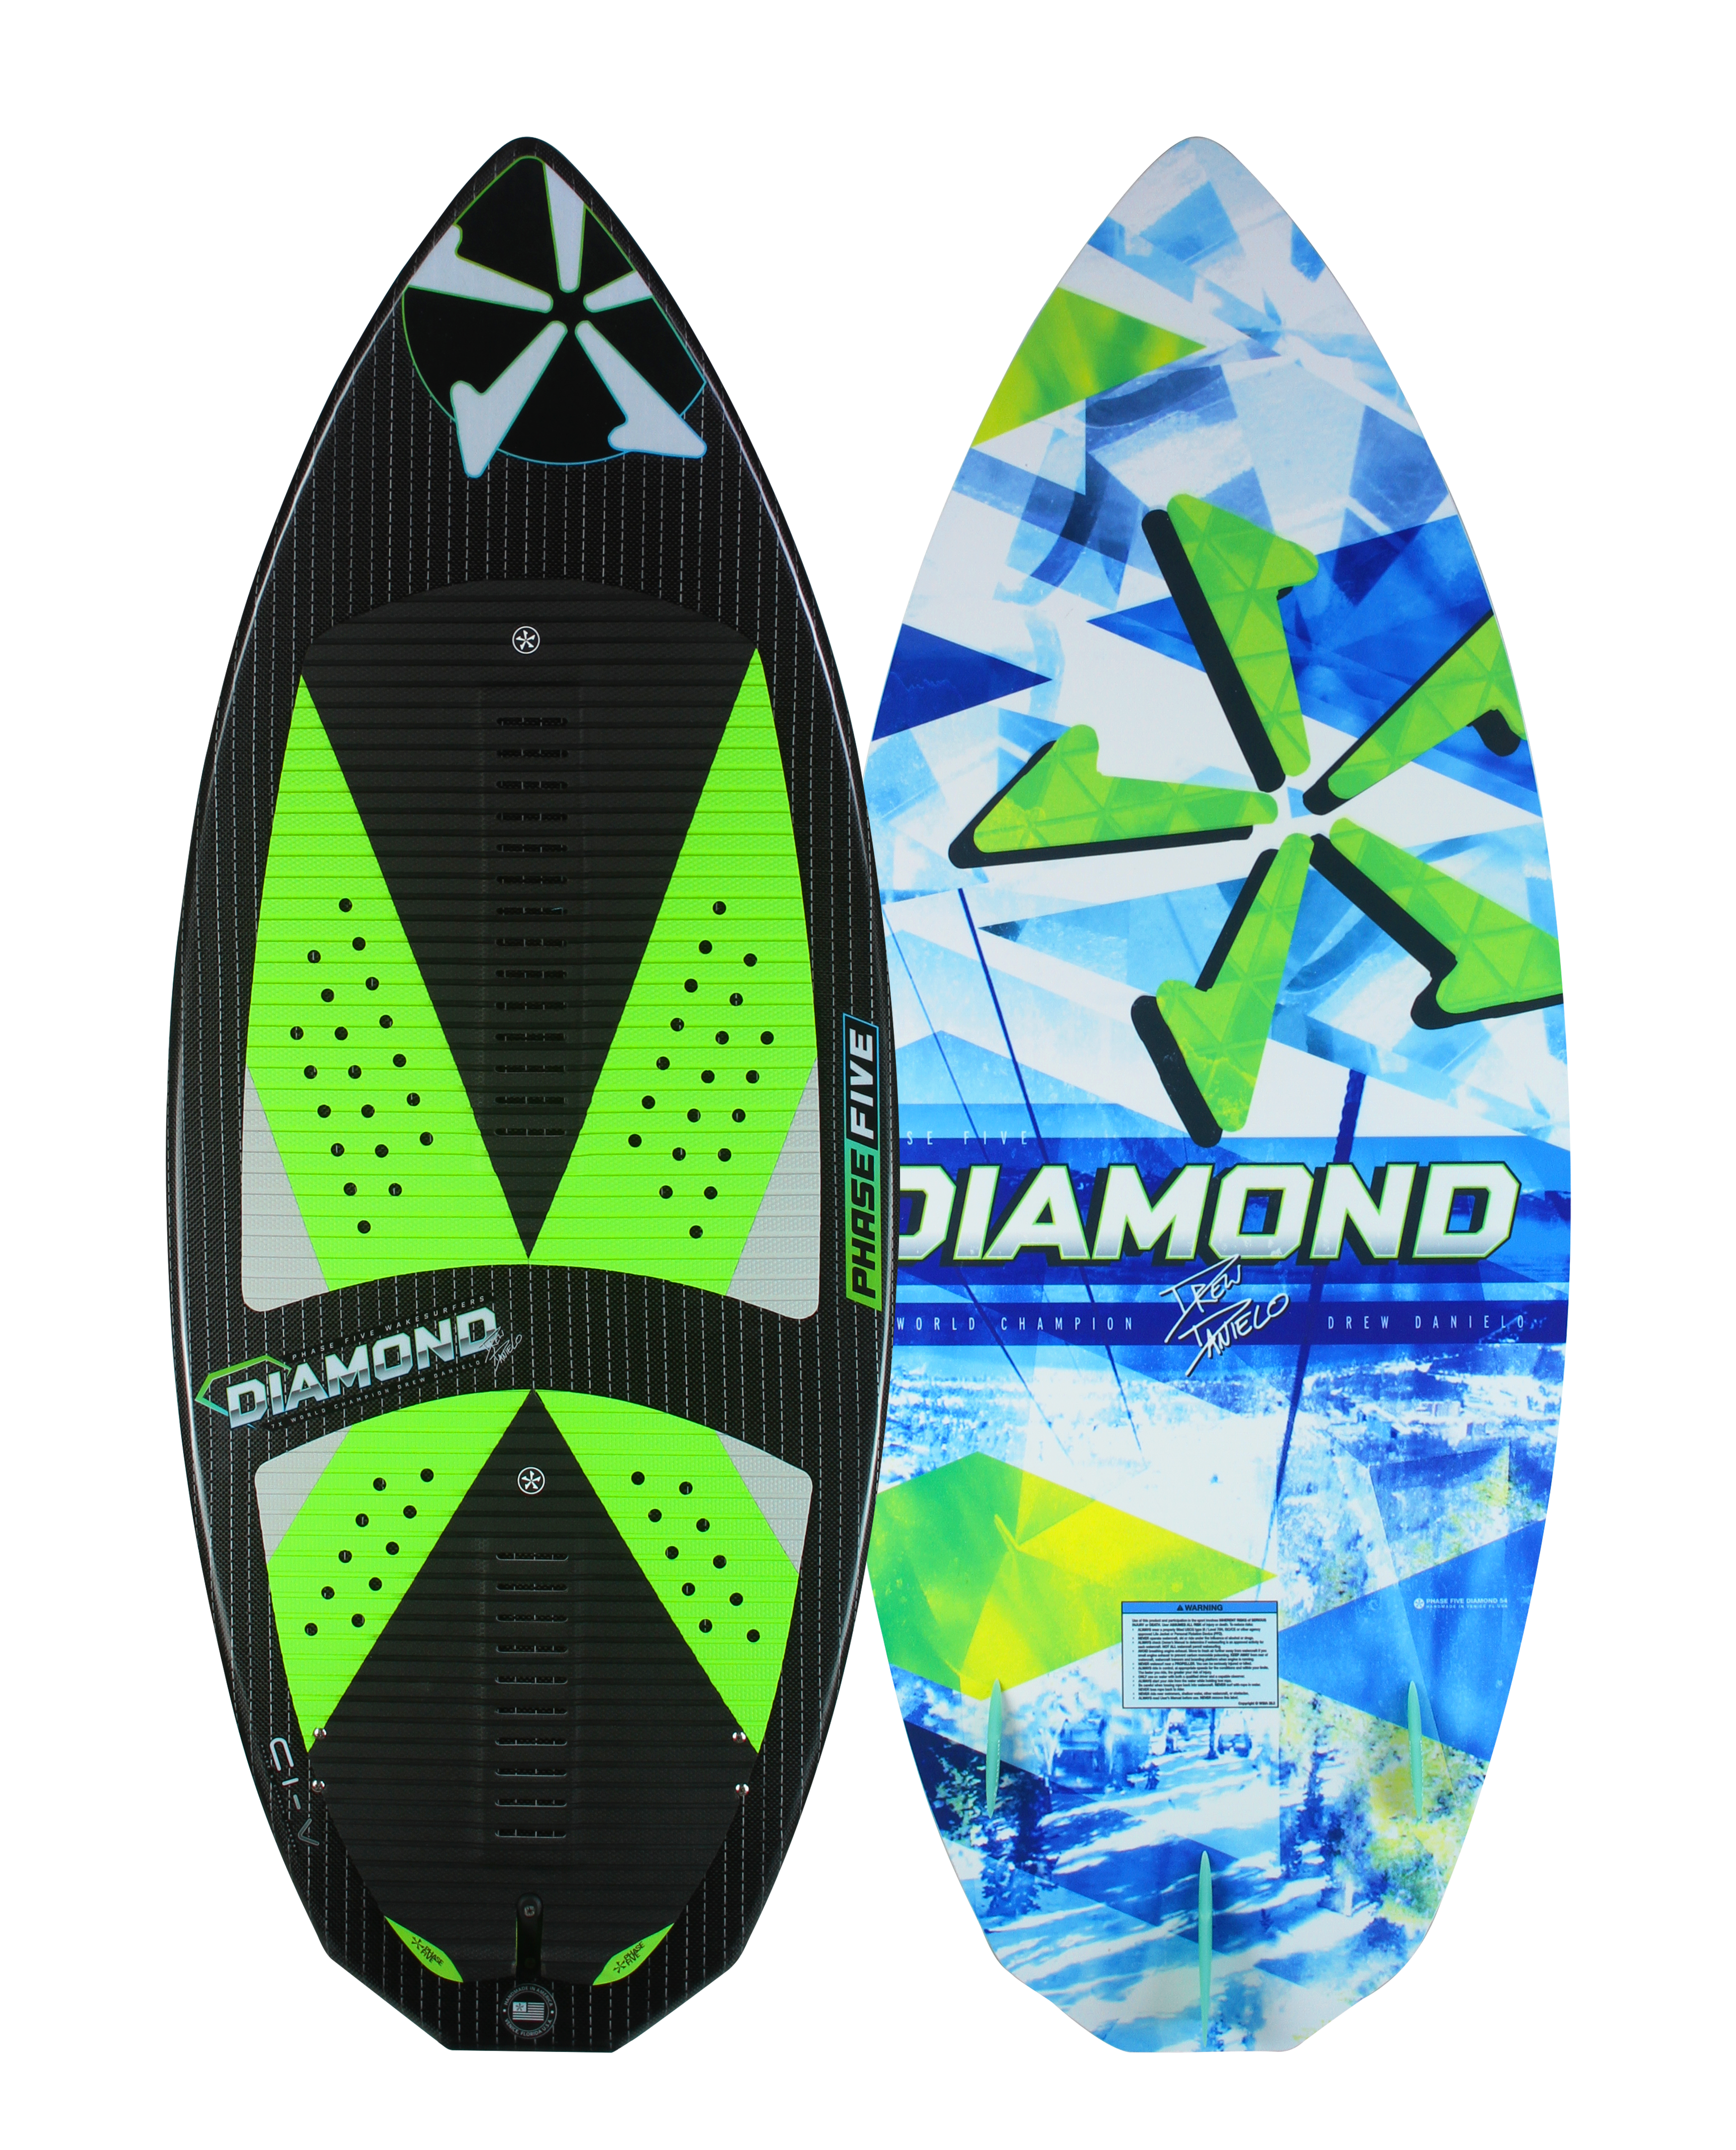 Phase Five Diamond Turbo Wakesurf Board 23 - 88 Gear